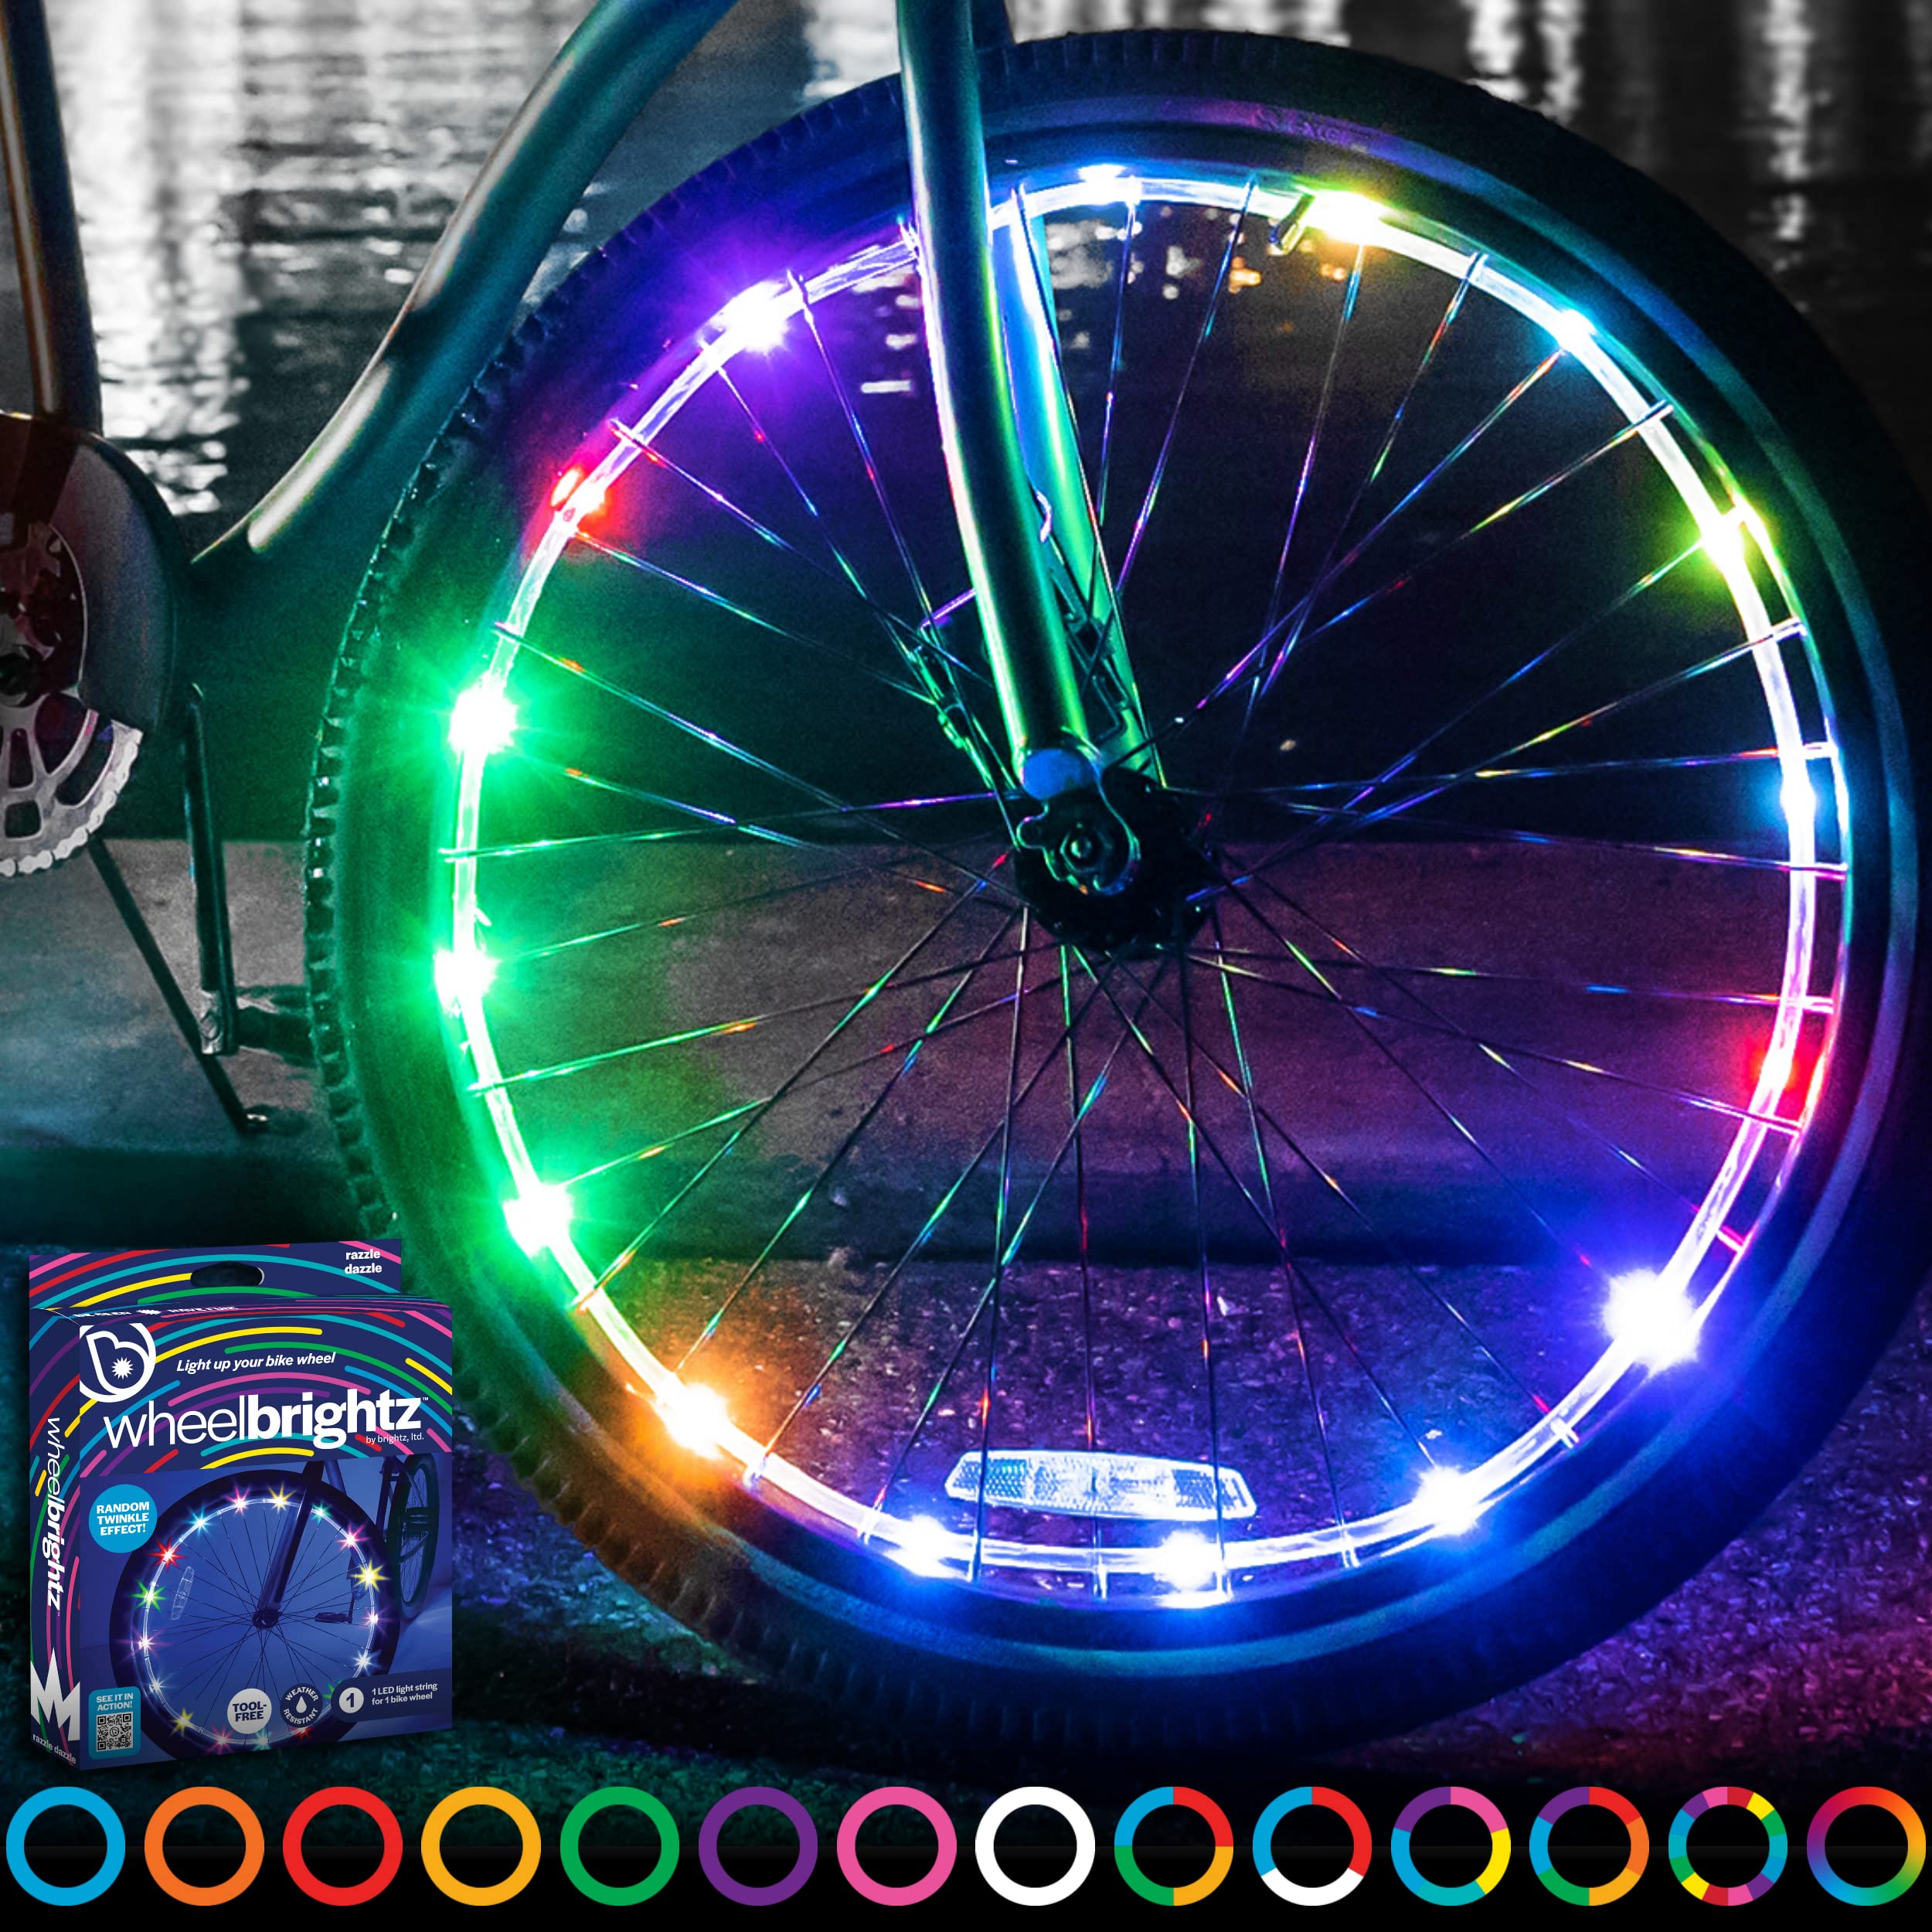 Brightz WheelBrightz LED Bike Wheel Light Pack of 1 Tire Light Bike Wheel  Lights Front and Back for Night Riding Battery Powered Bike Lights - Bicycle  LED Spoke Light Decoration Accessories Razzle Dazzle